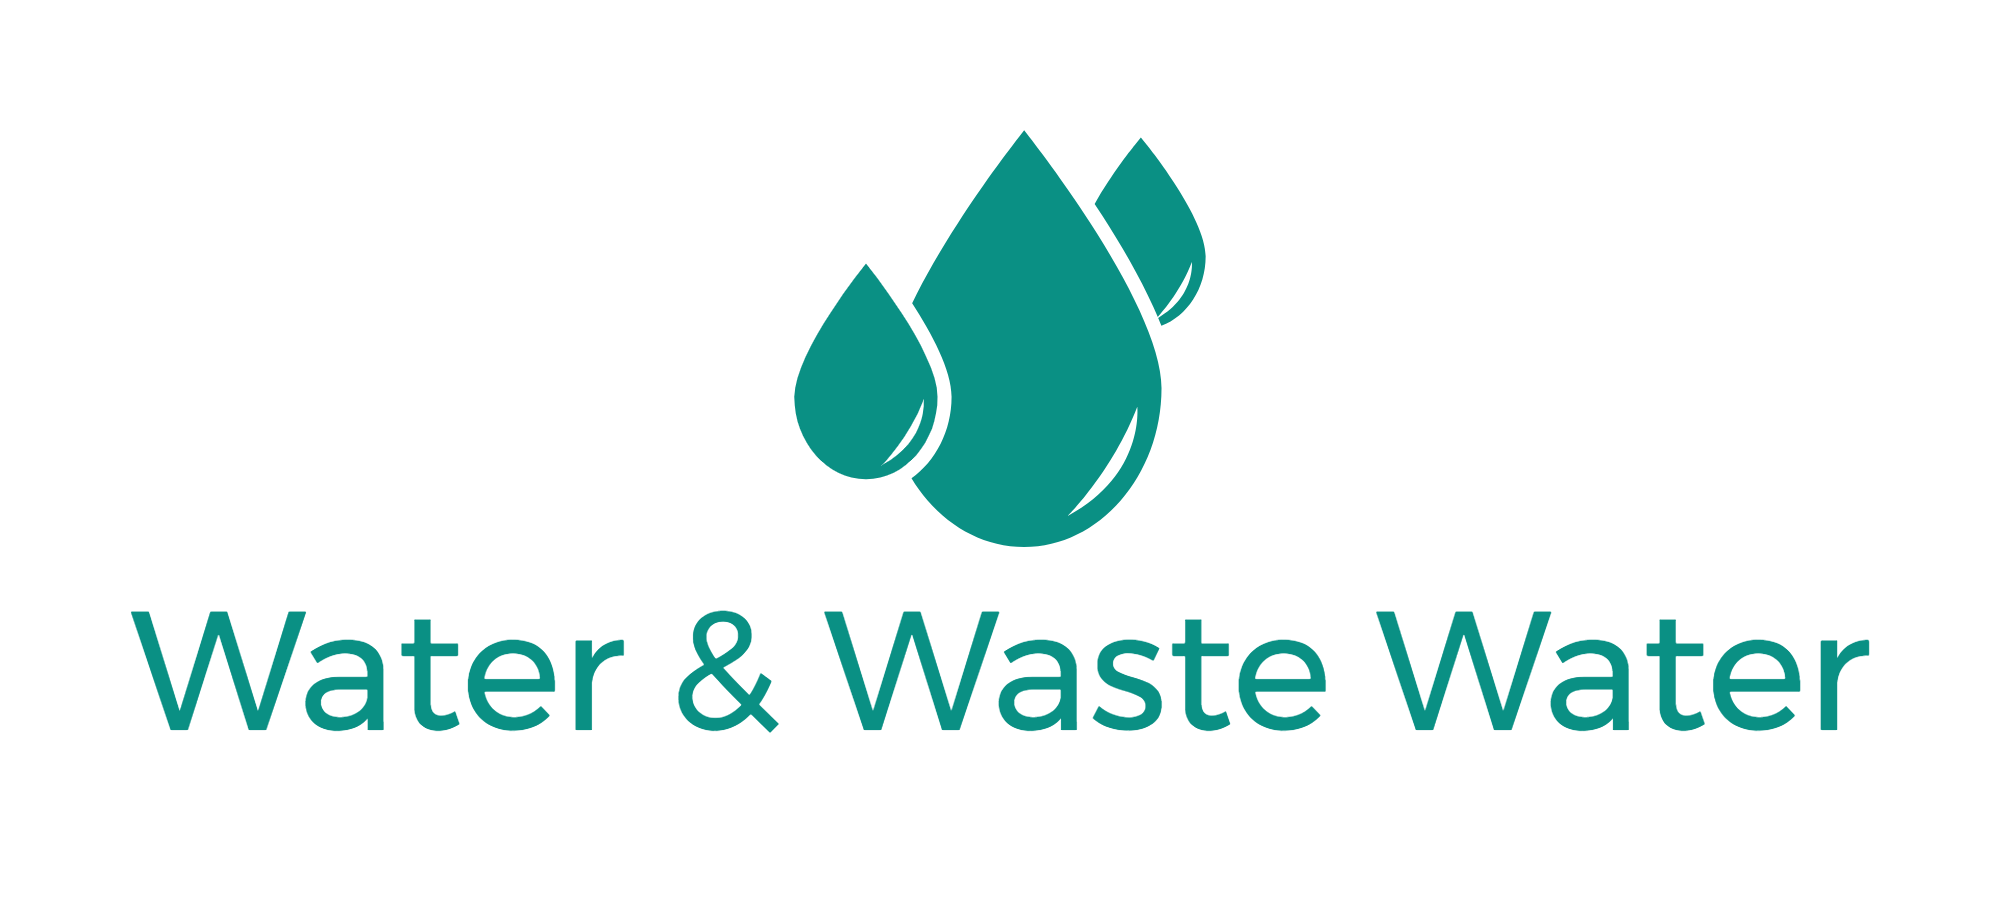 Water & Waste Water-logo.png